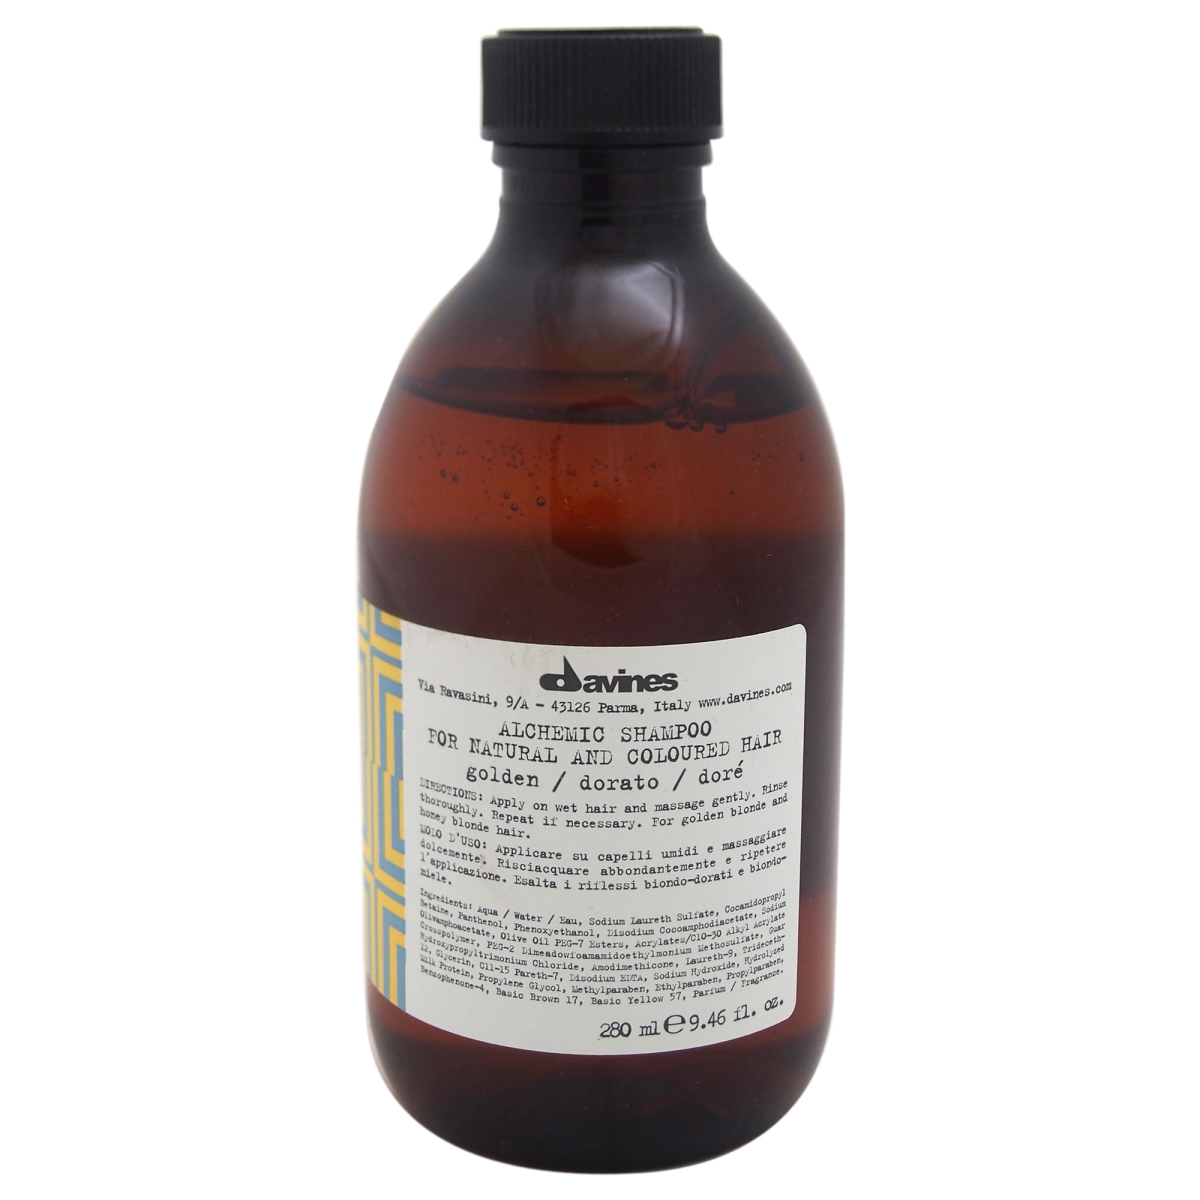 U-hc-8928 9.46 Oz Unisex Alchemic Golden Shampoo